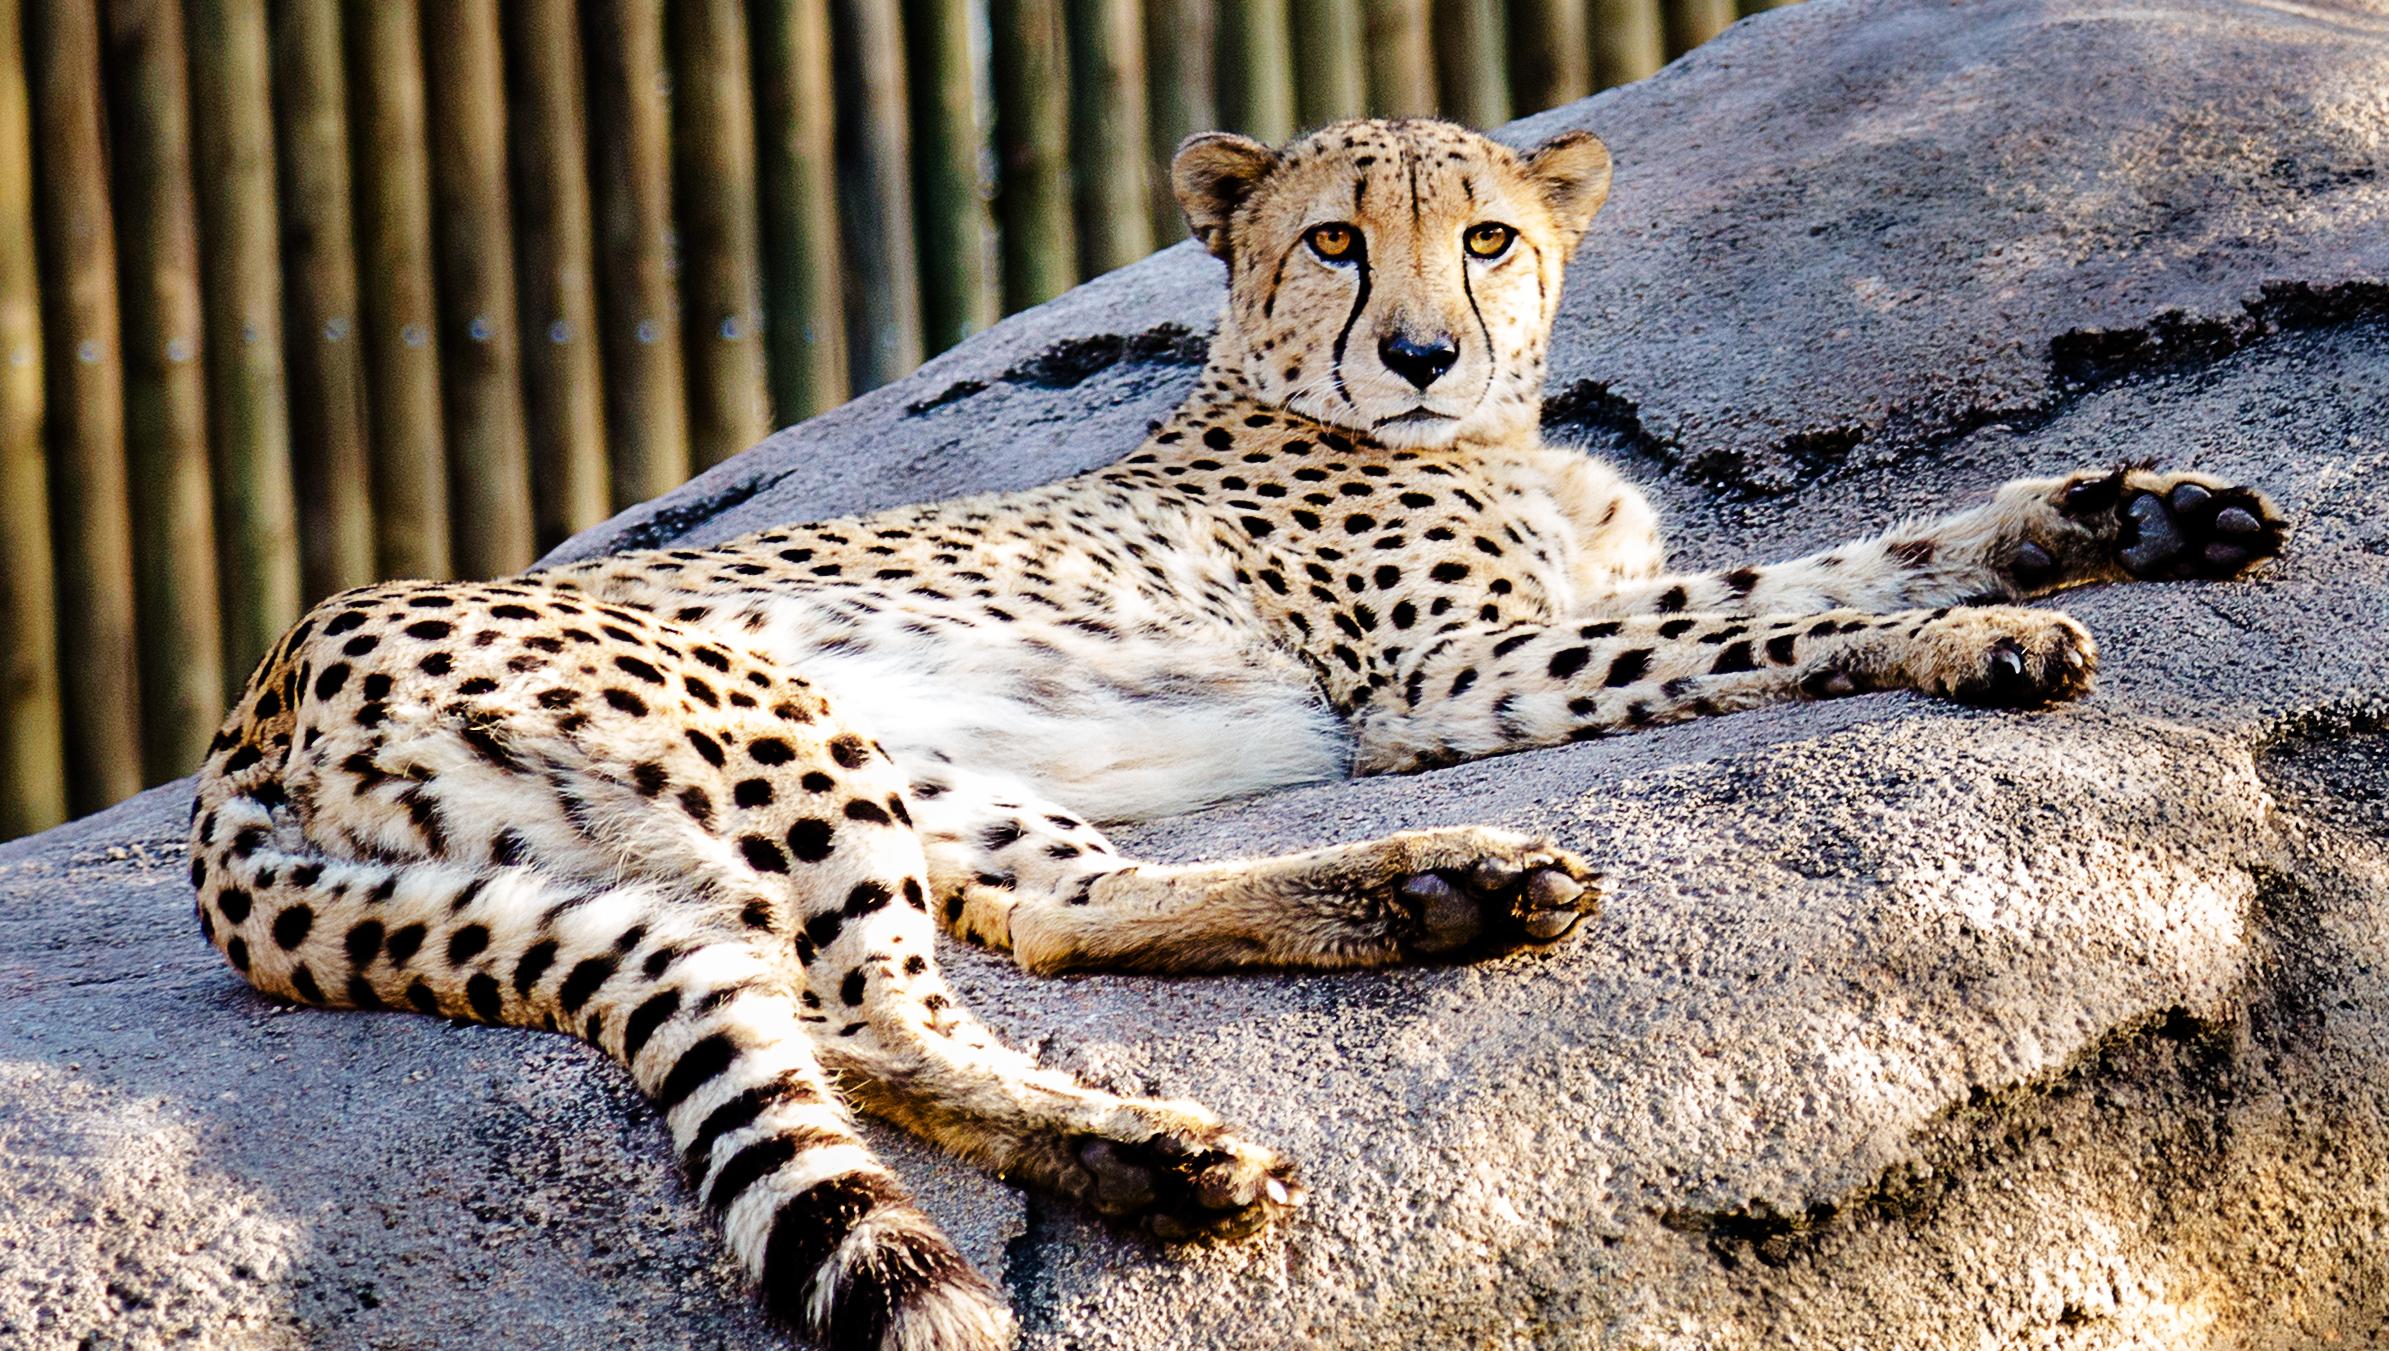 Cheetah lounging on a rock at the zoo